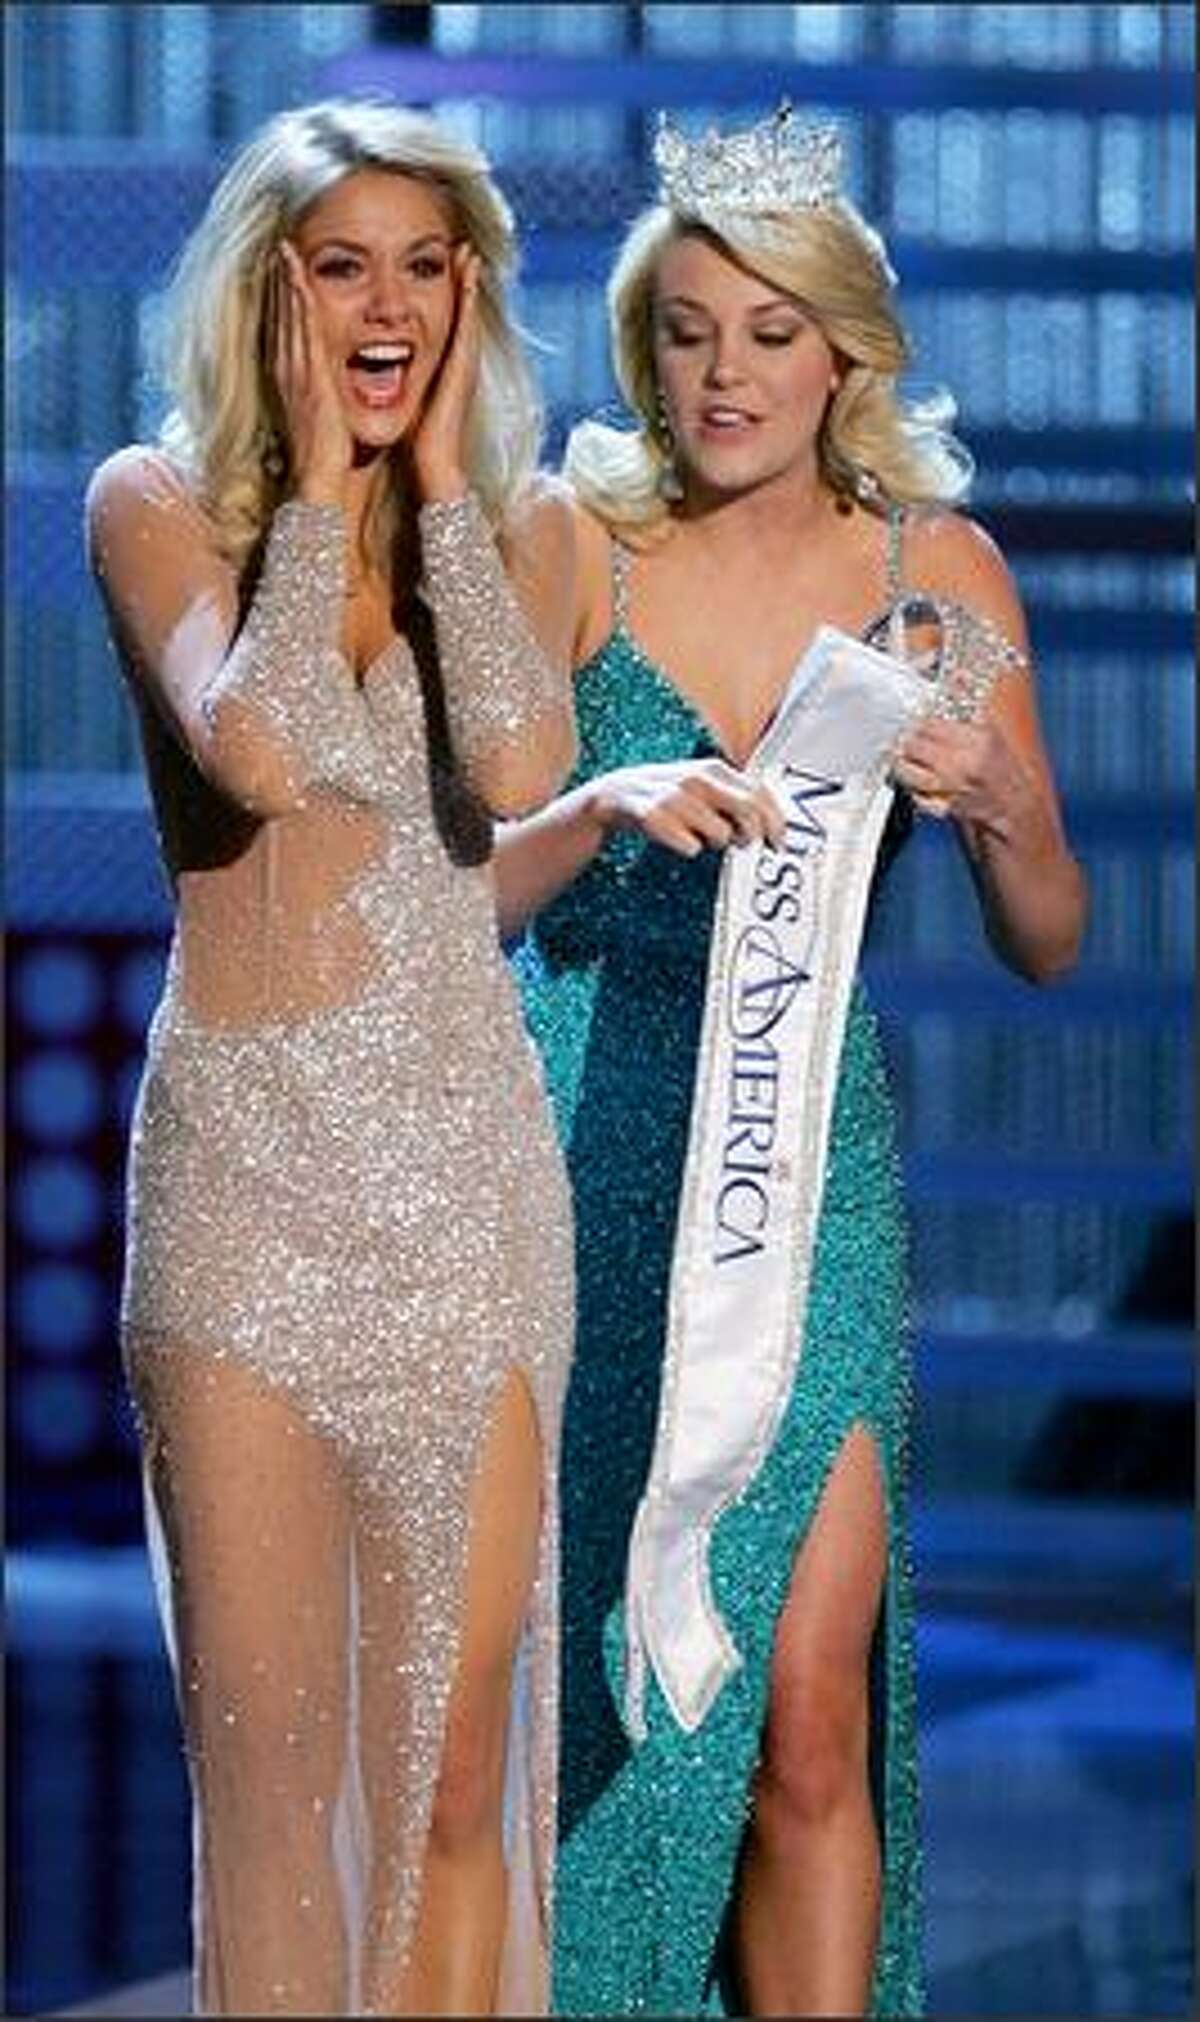 Miss America 2007 Lauren Nelson (right) gives the Miss America sash to Miss Michigan Kirsten Haglund.